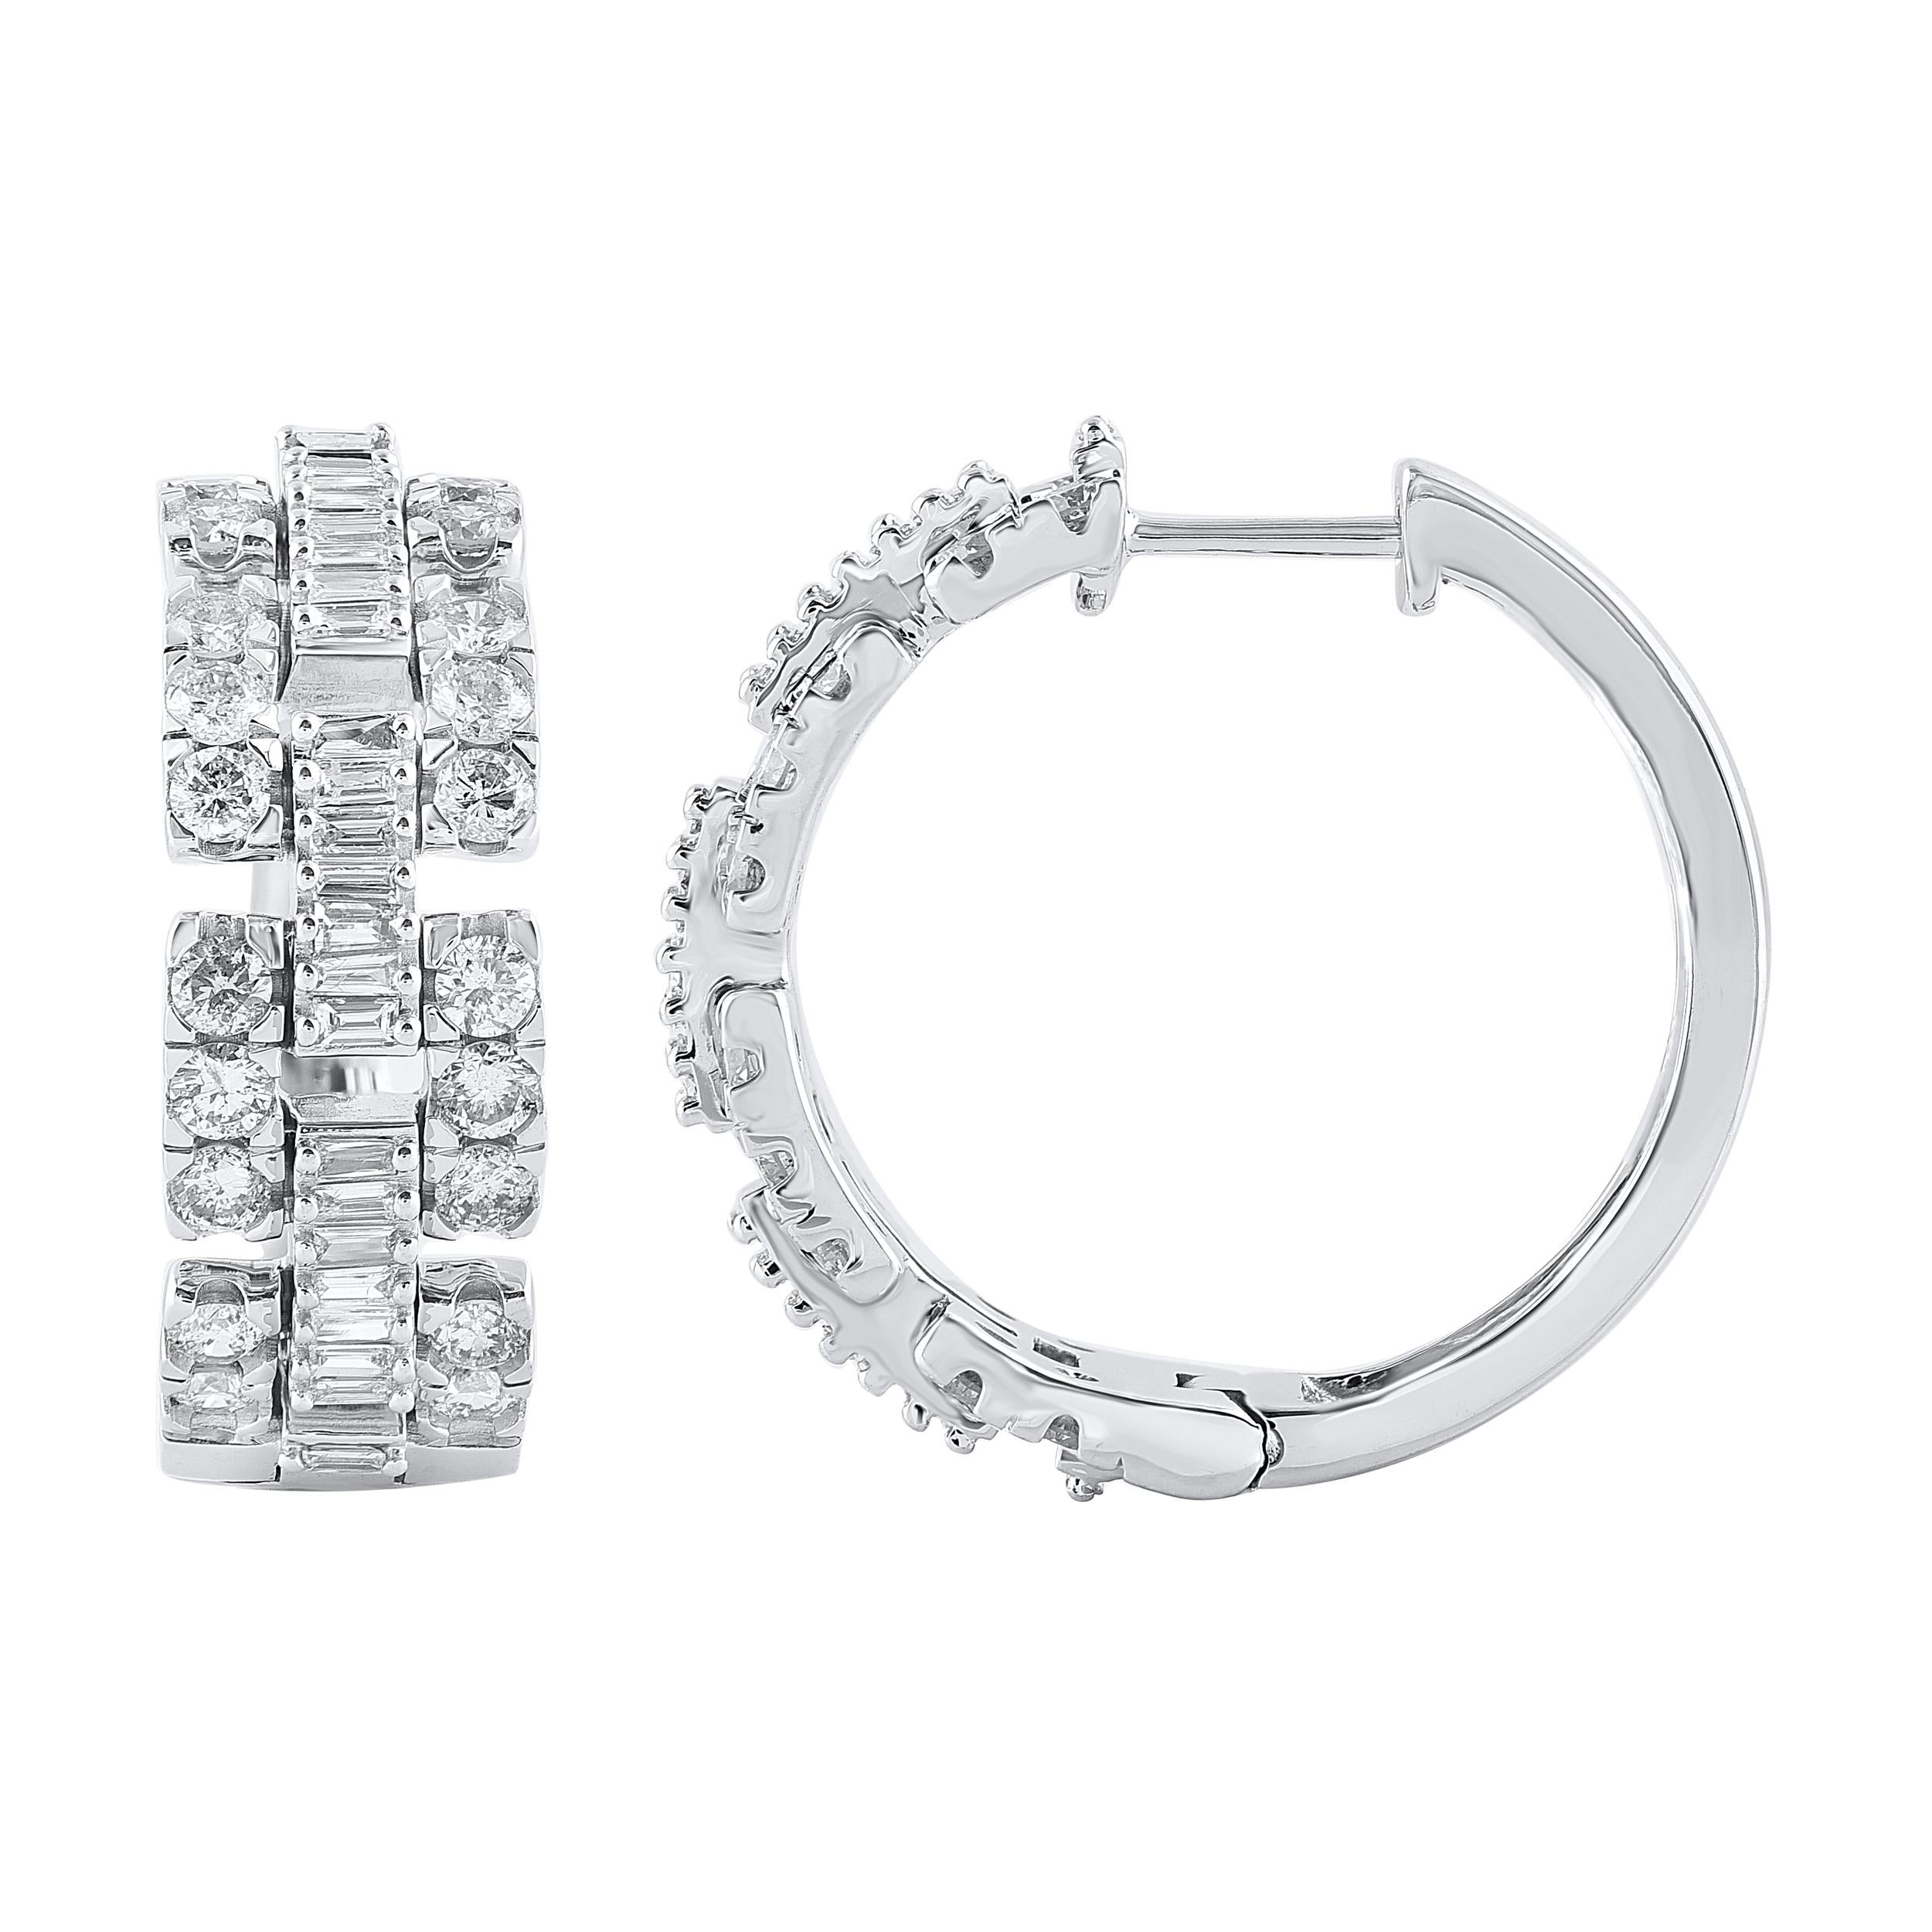 TJD 2 Carat Round & Baguette Cut Diamond Huggie Hoop Earrings in 14KT White Gold For Sale